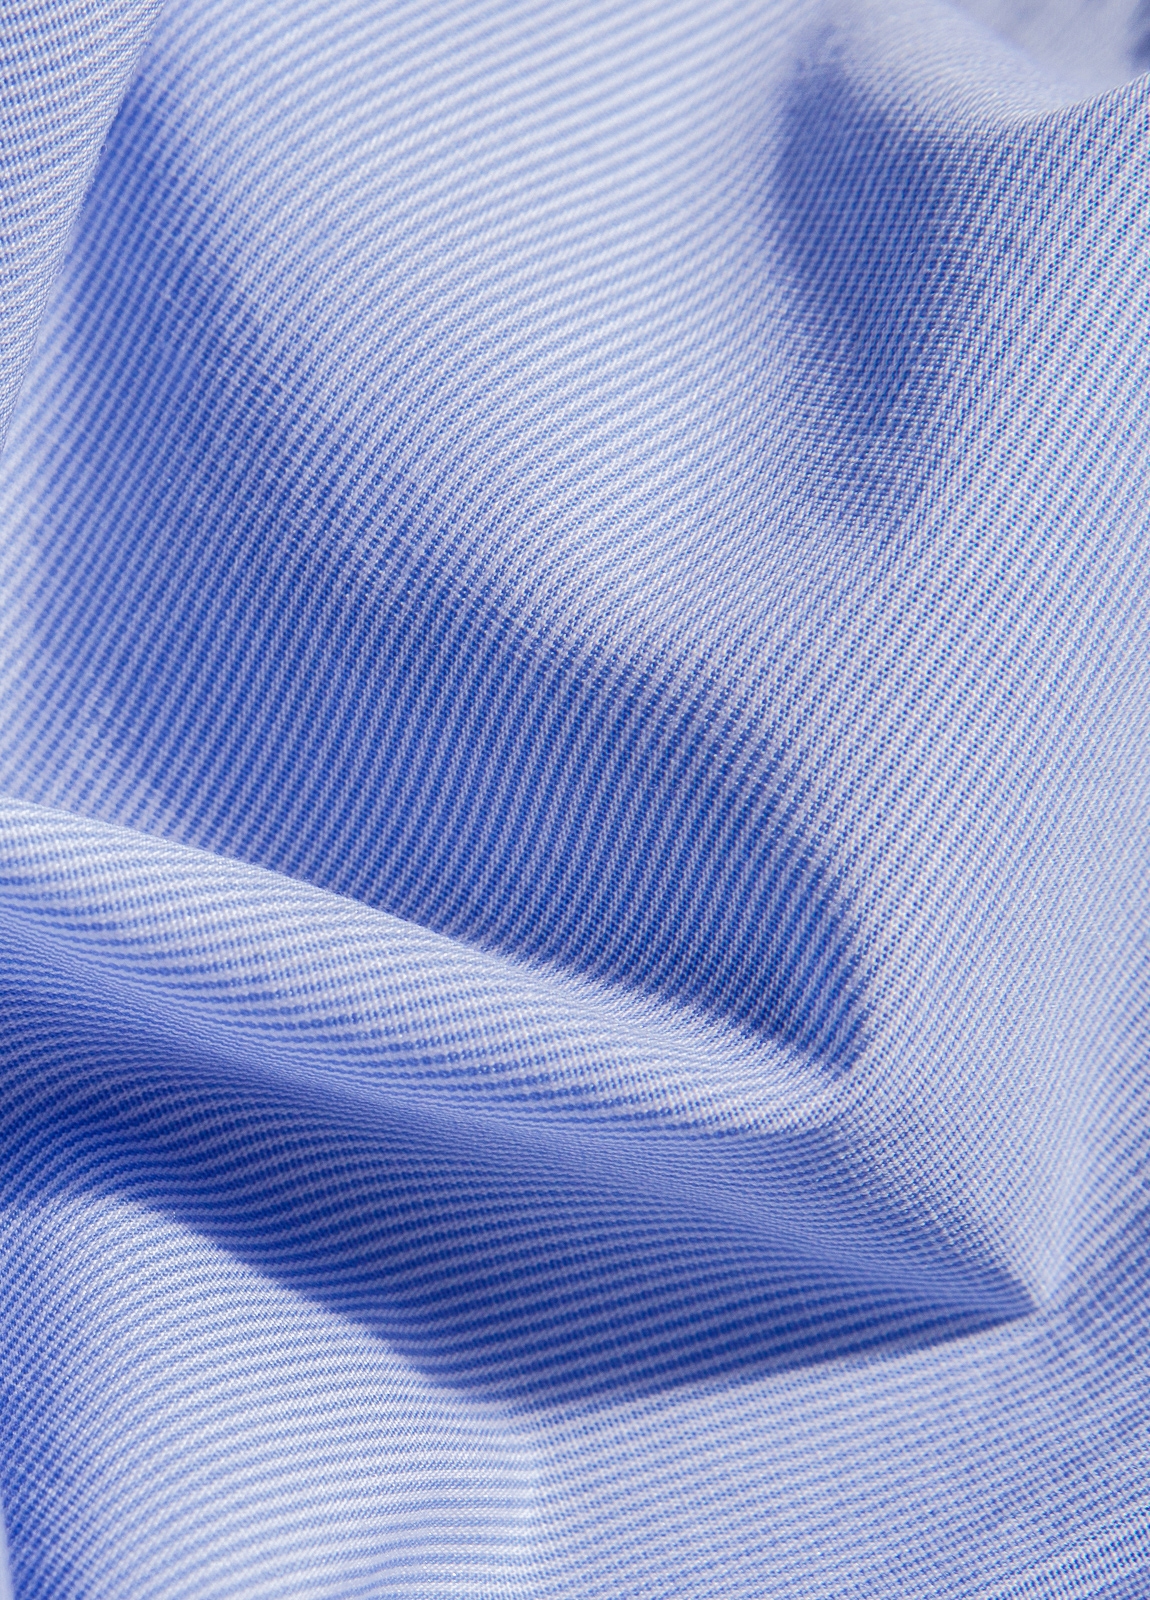 Camisa sport FUREST COLECCION micro rayas azul - Ítem3